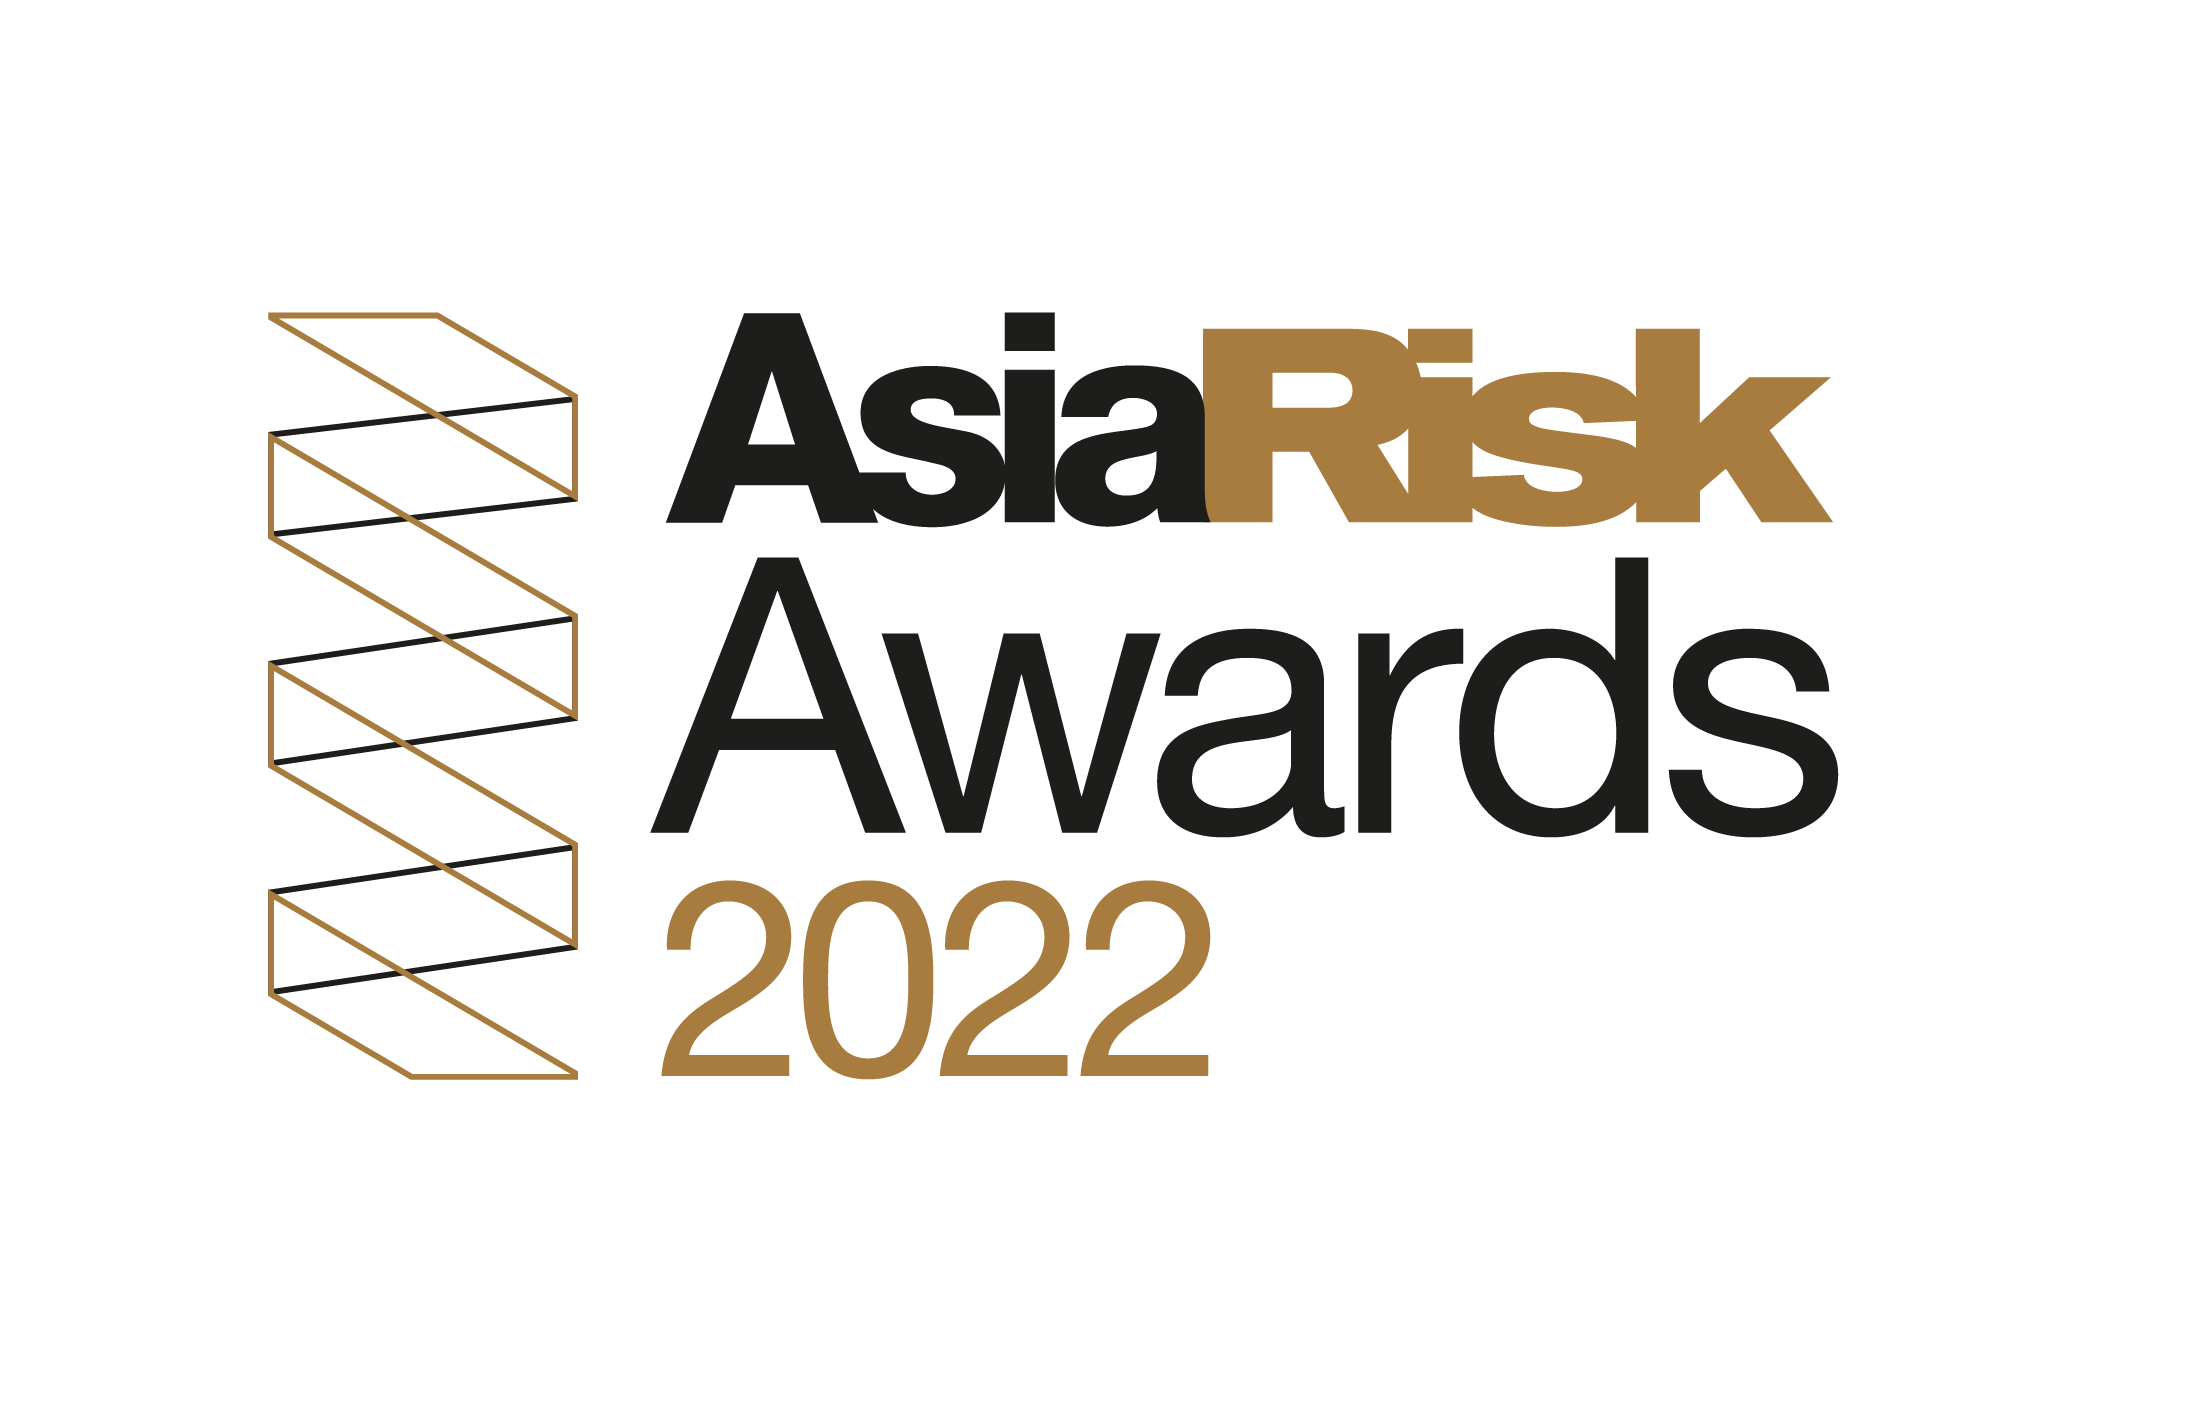 Asia Risk Awards 2022